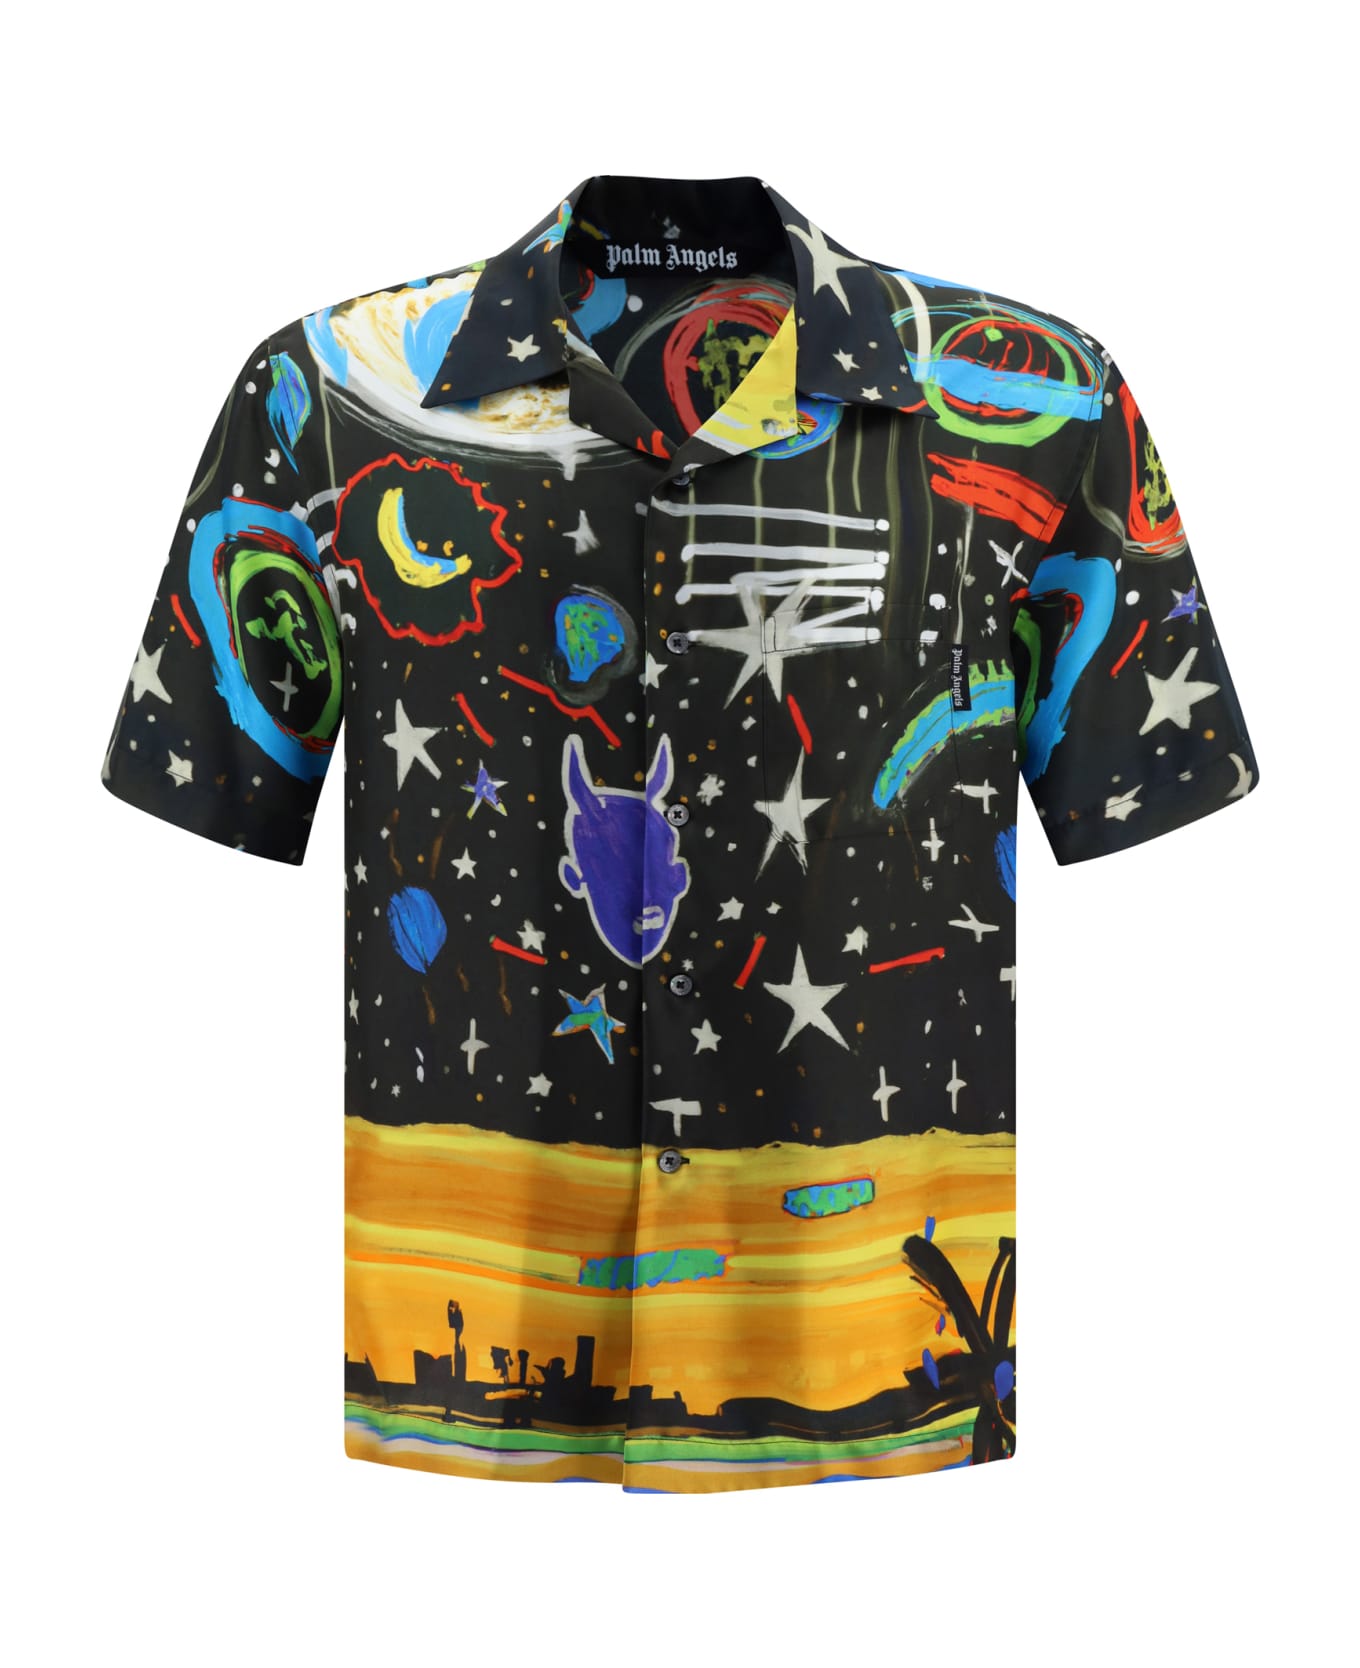 Palm Angels Starry Night Bowling Shirt - Black Mult シャツ